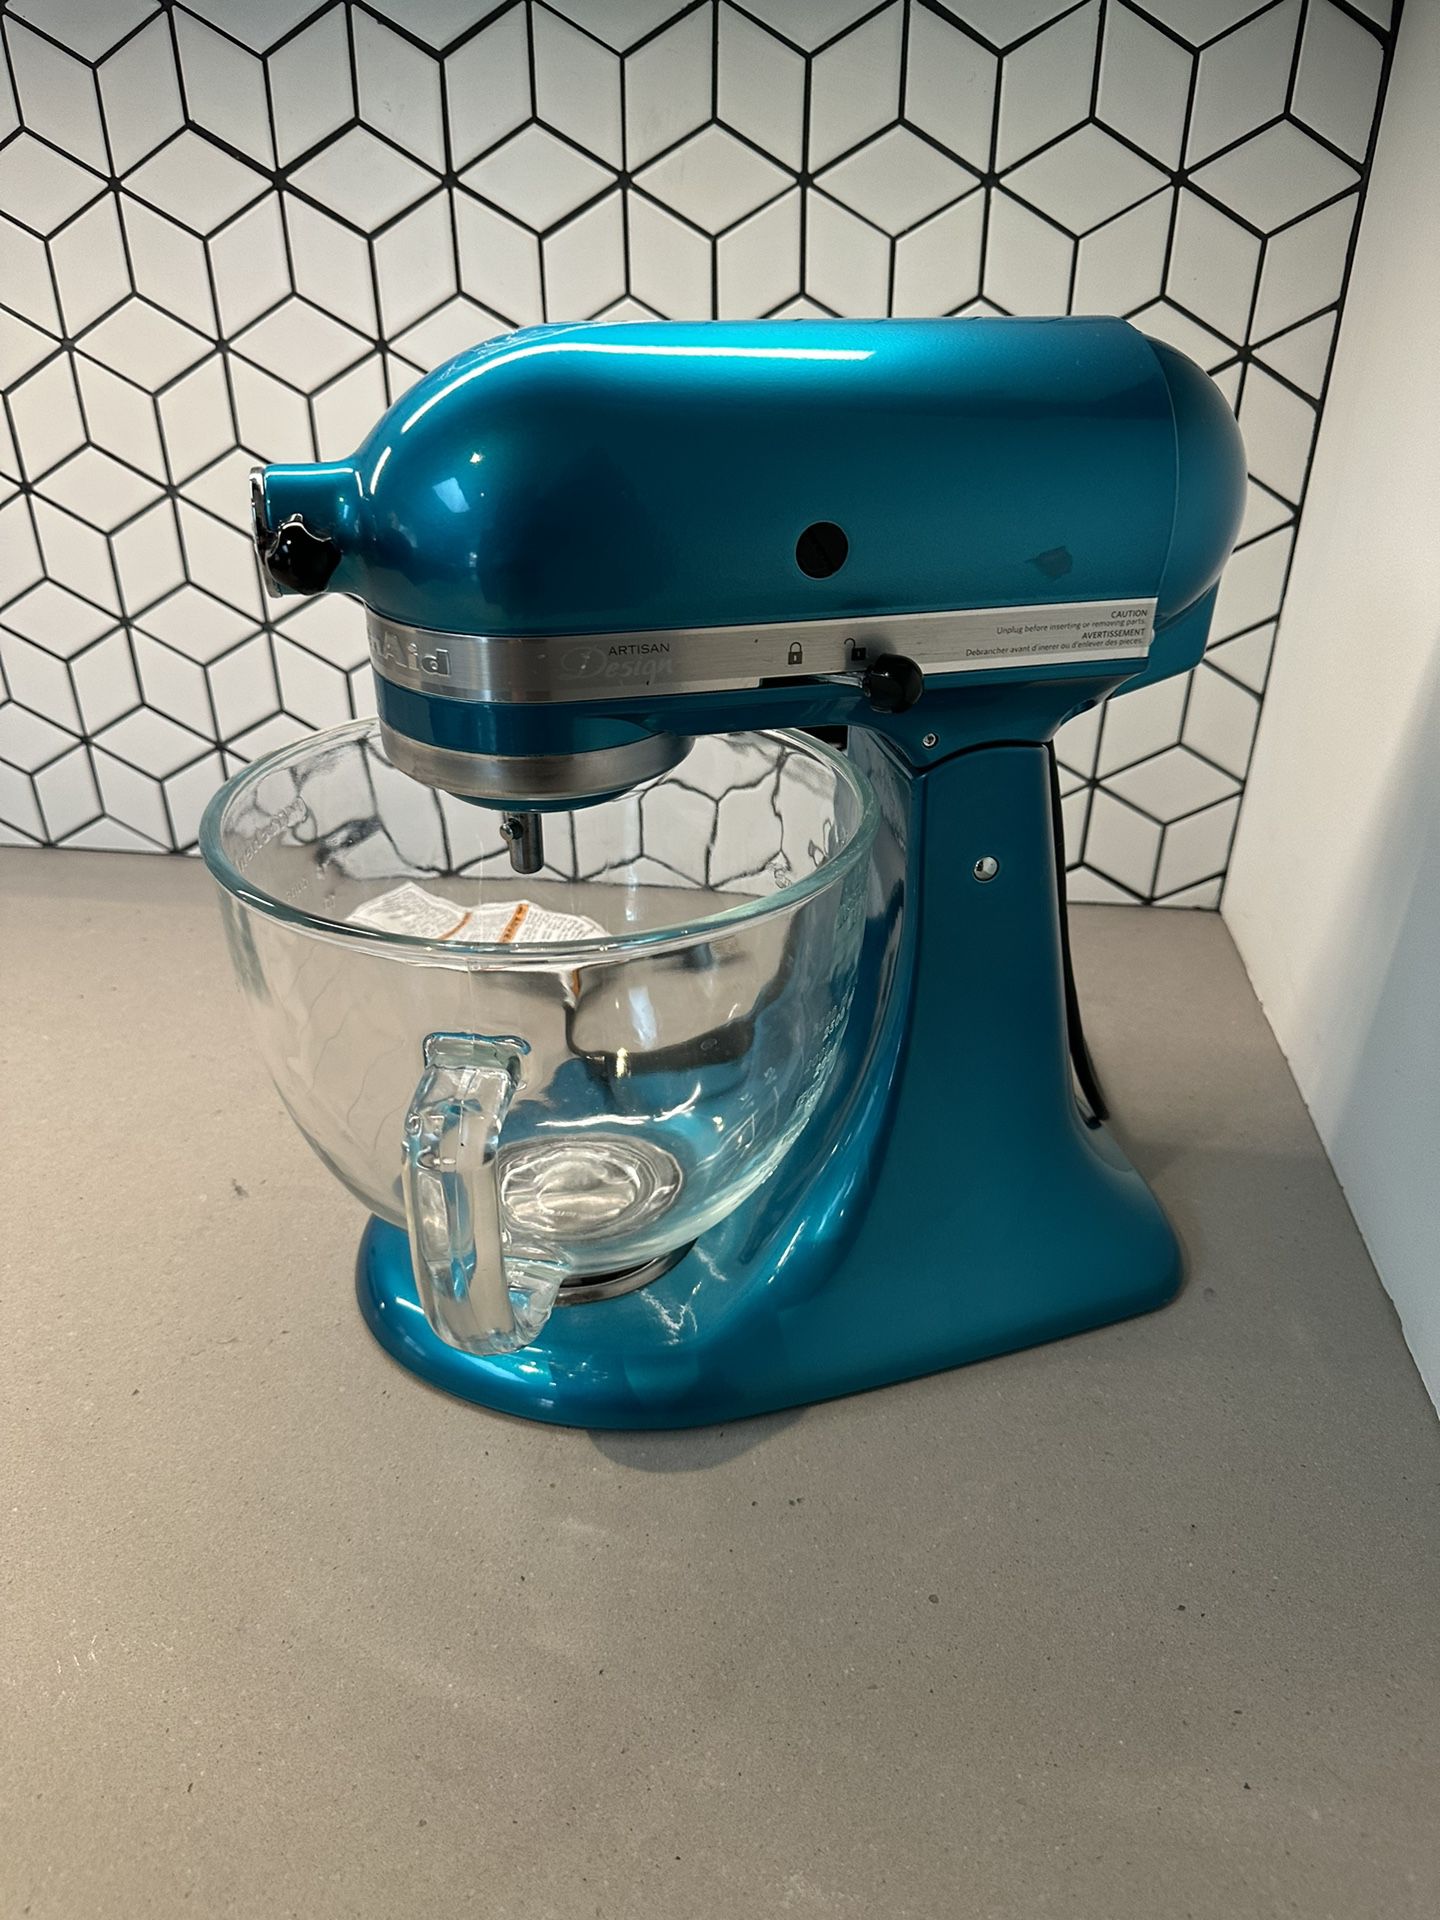 Artisan Design 5-Quart KitchenAid Stand Mixer with Glass Bowl